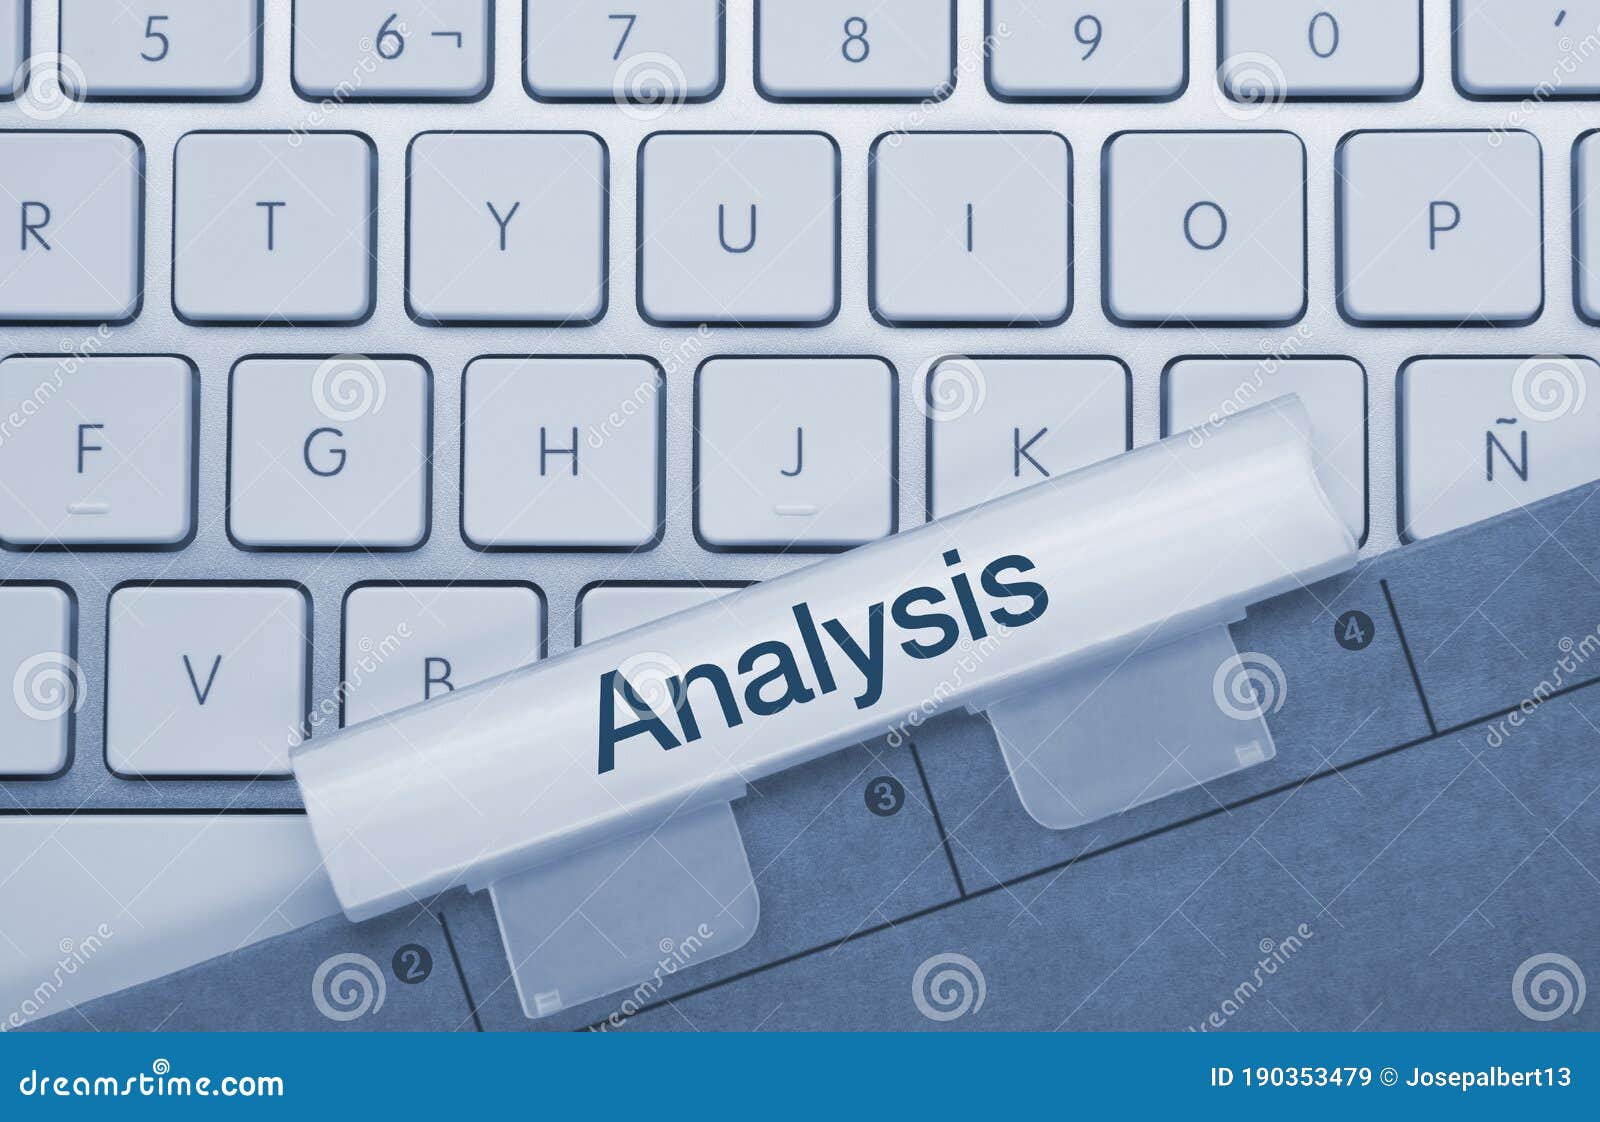 analysis - inscription on blue keyboard key